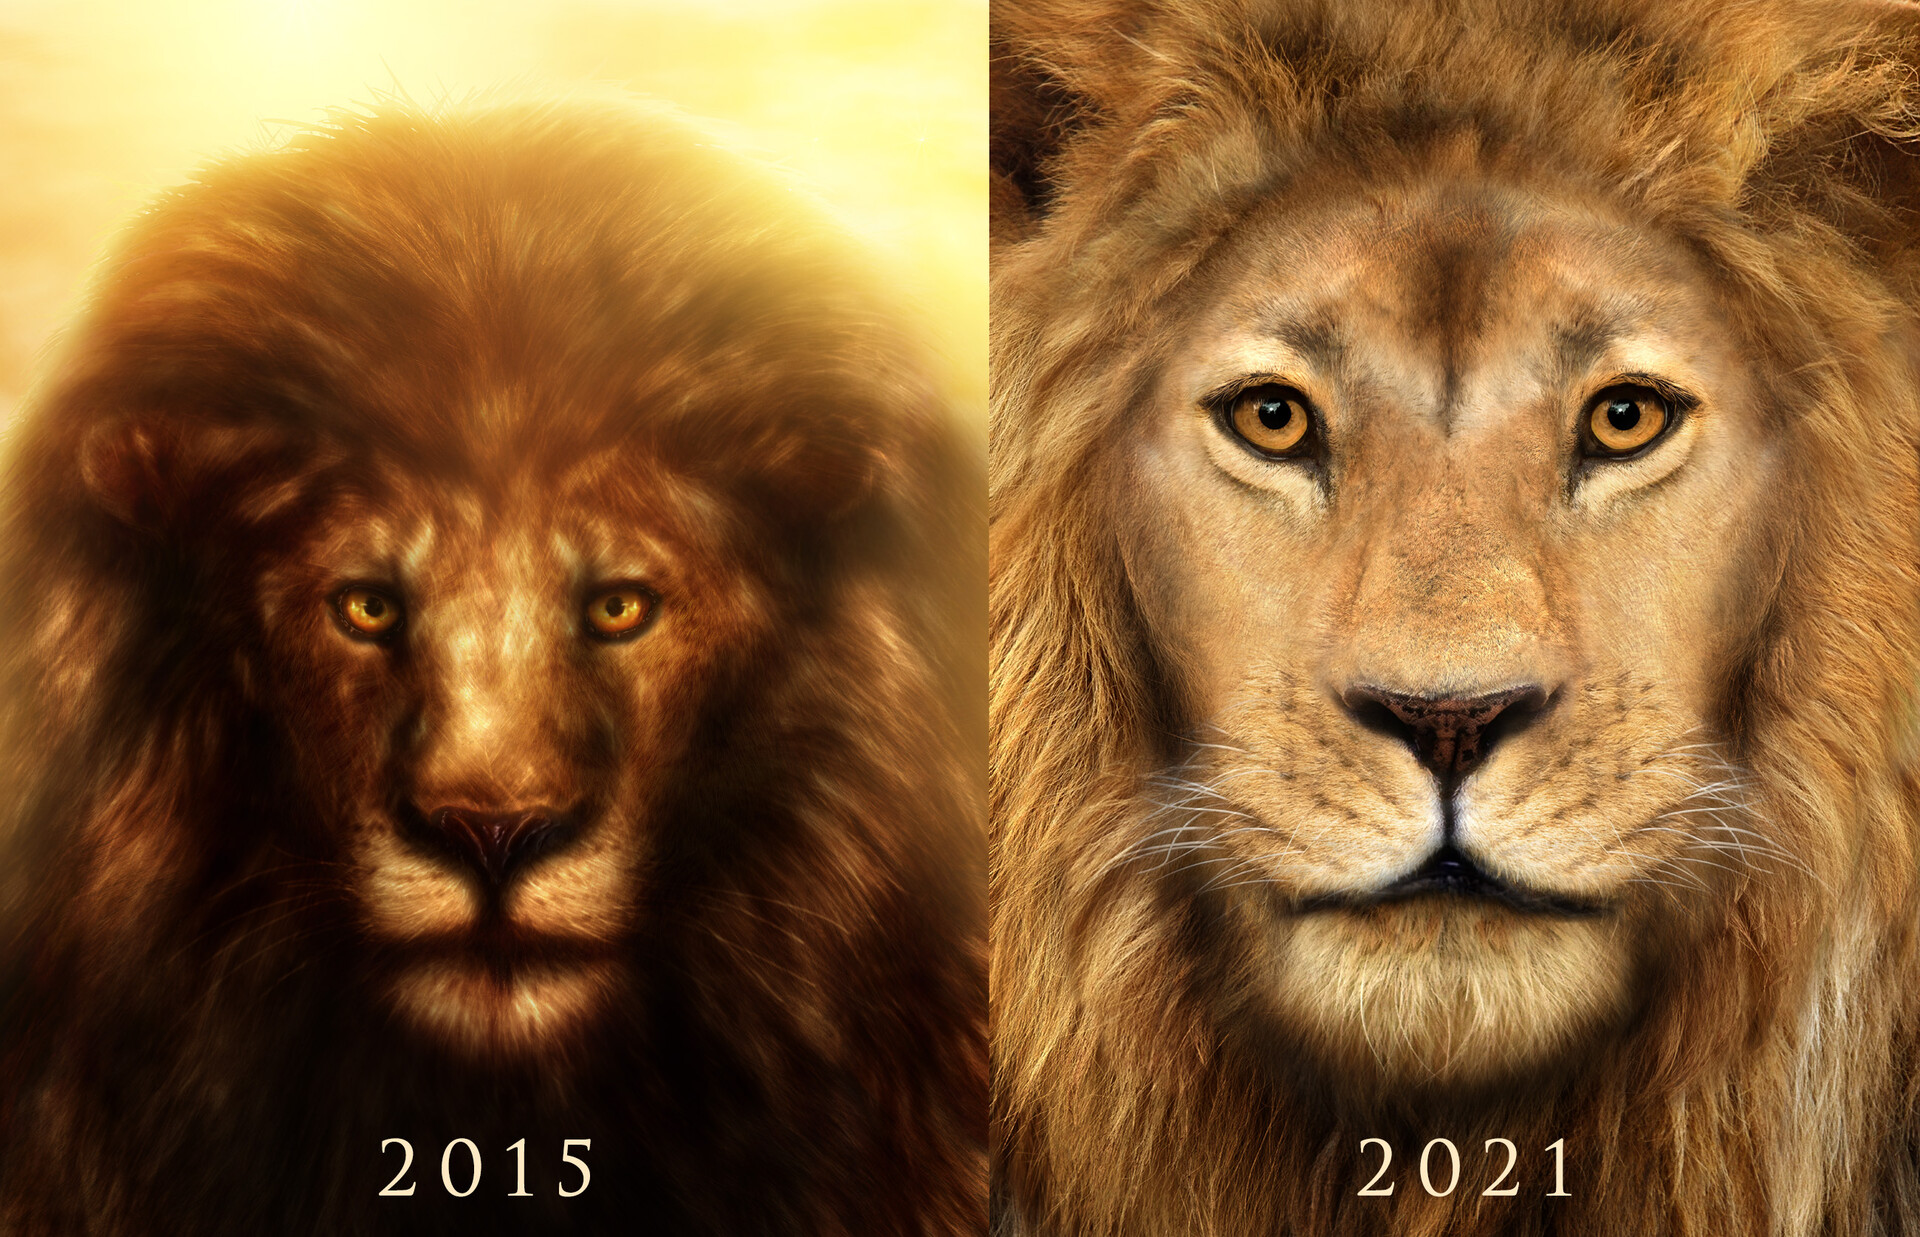 David Rogers - The Lion of Judah